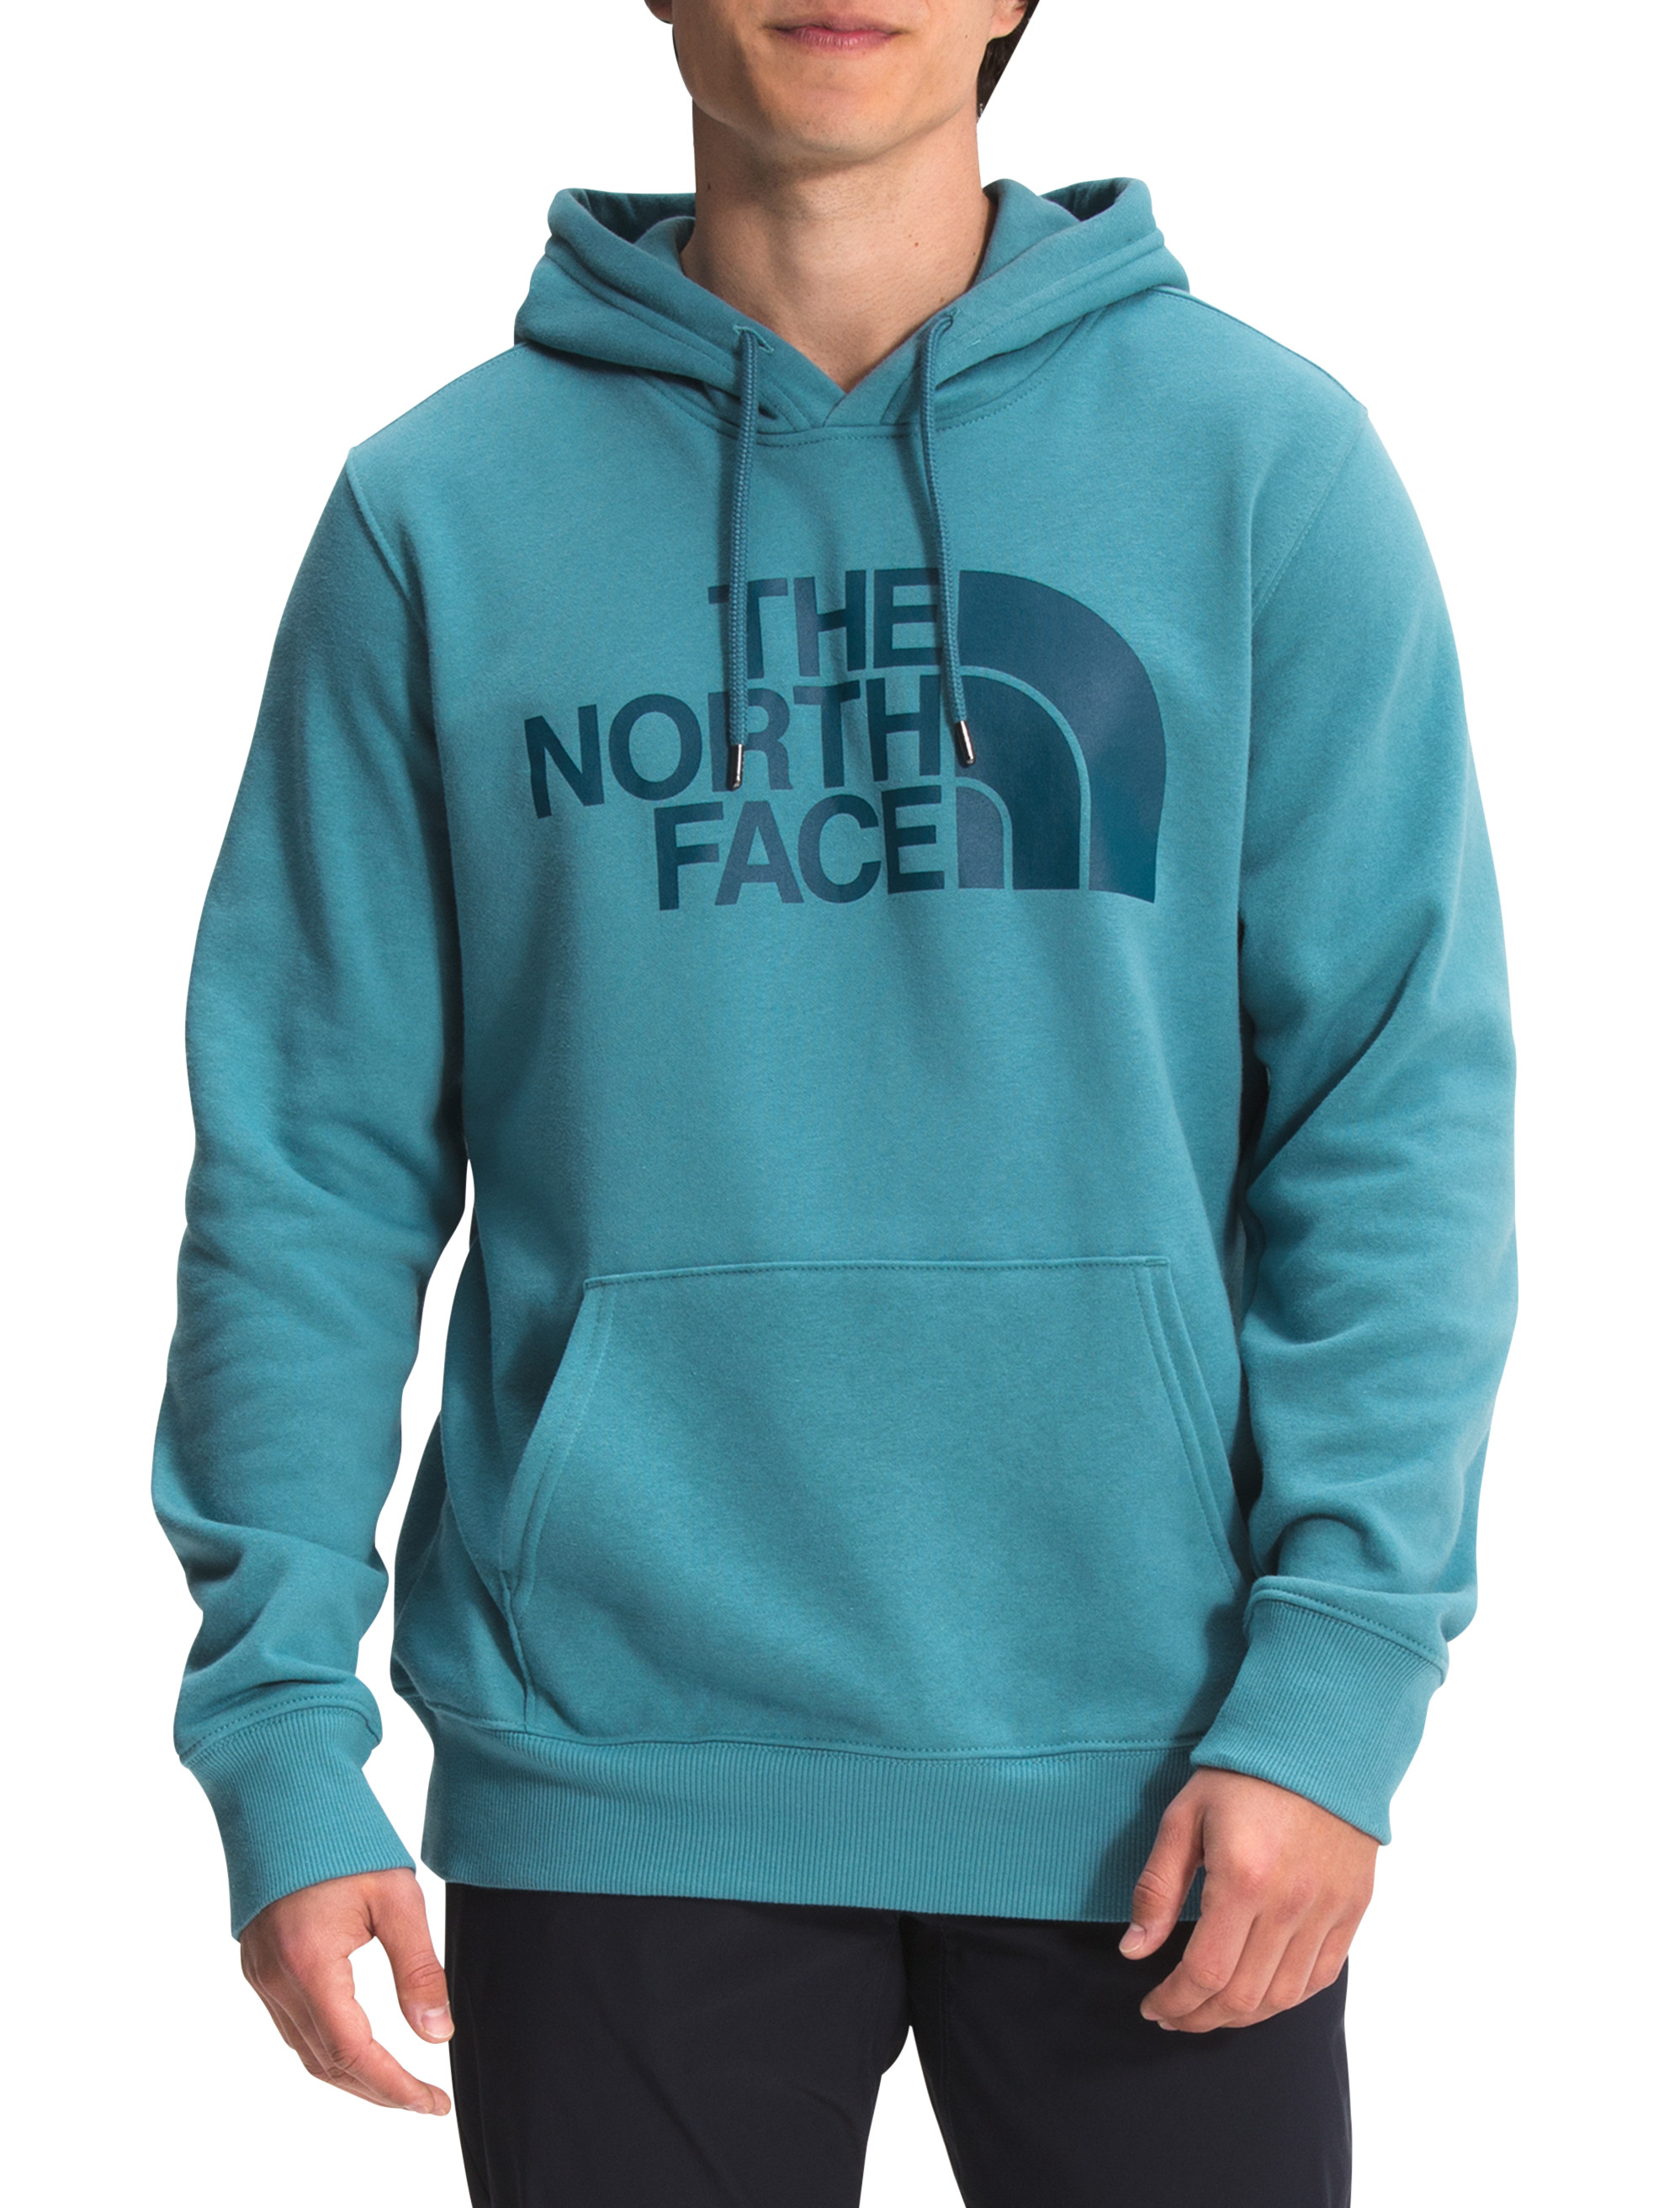 the north face men's jacket 3xl